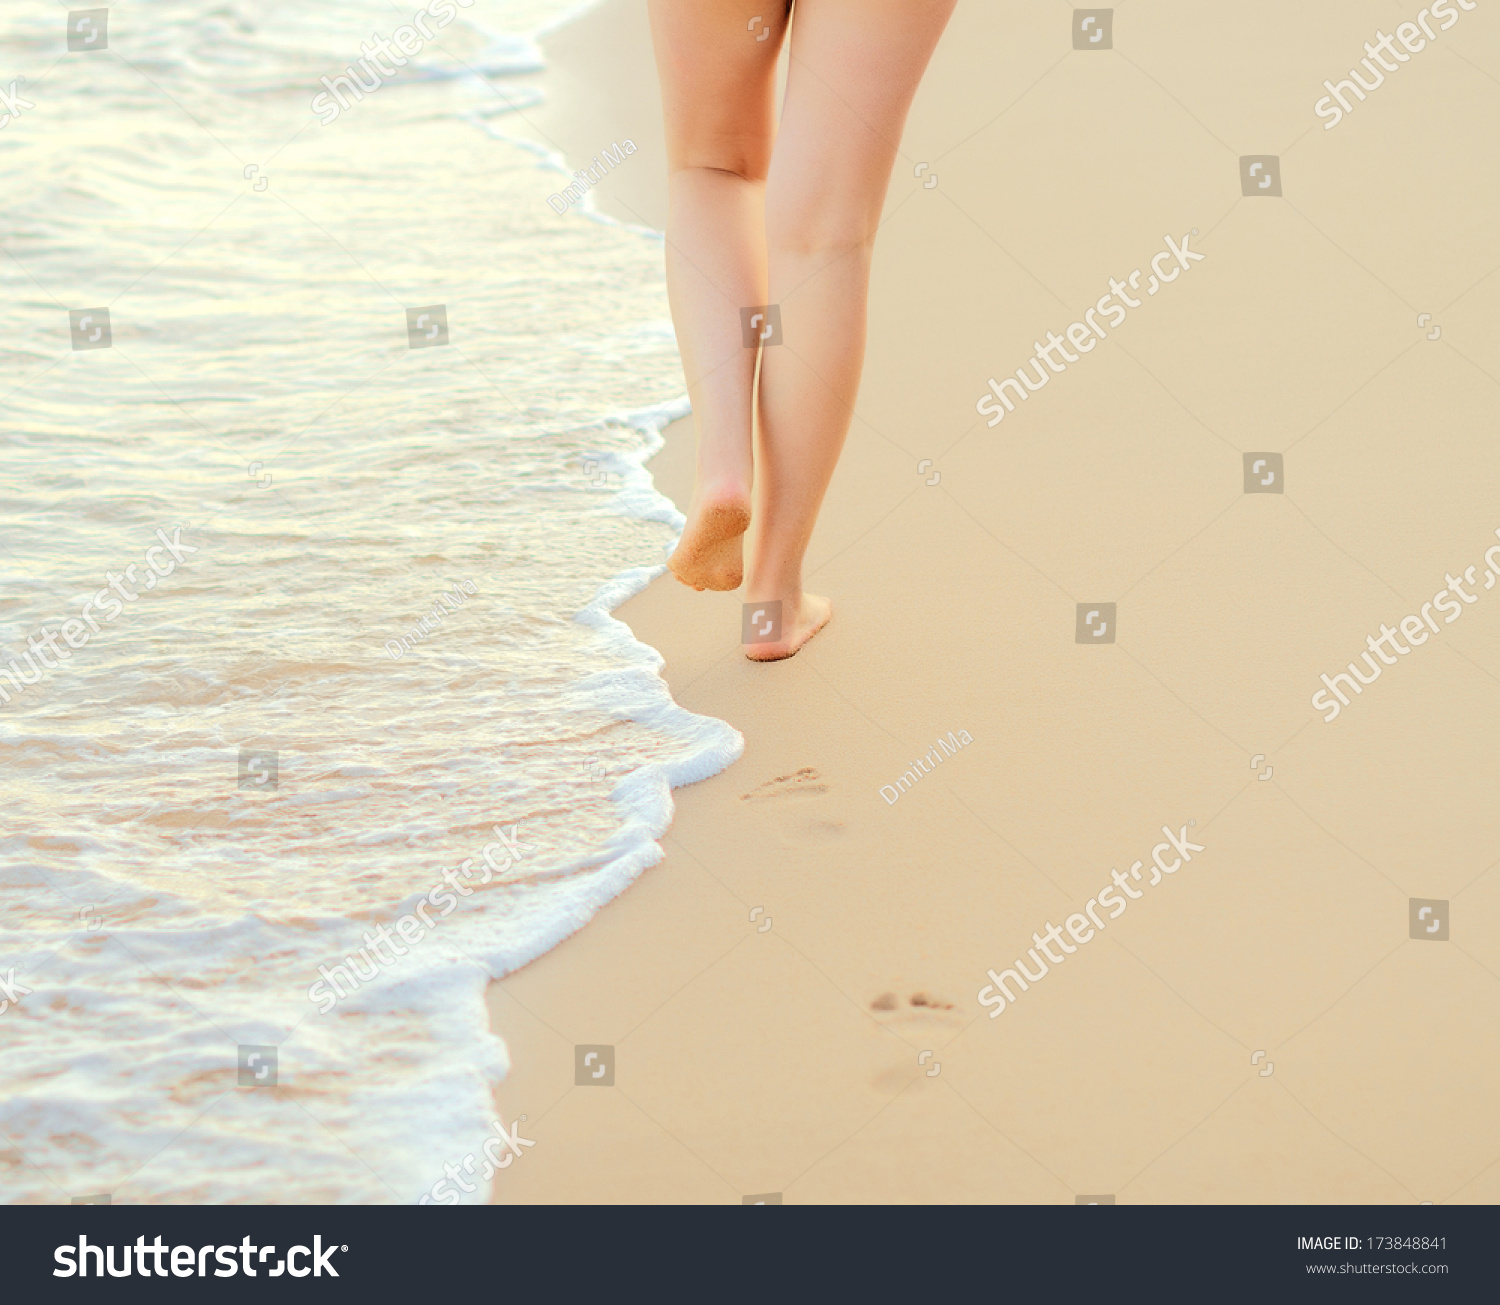 Pair of female legs on a seashore. #173848841